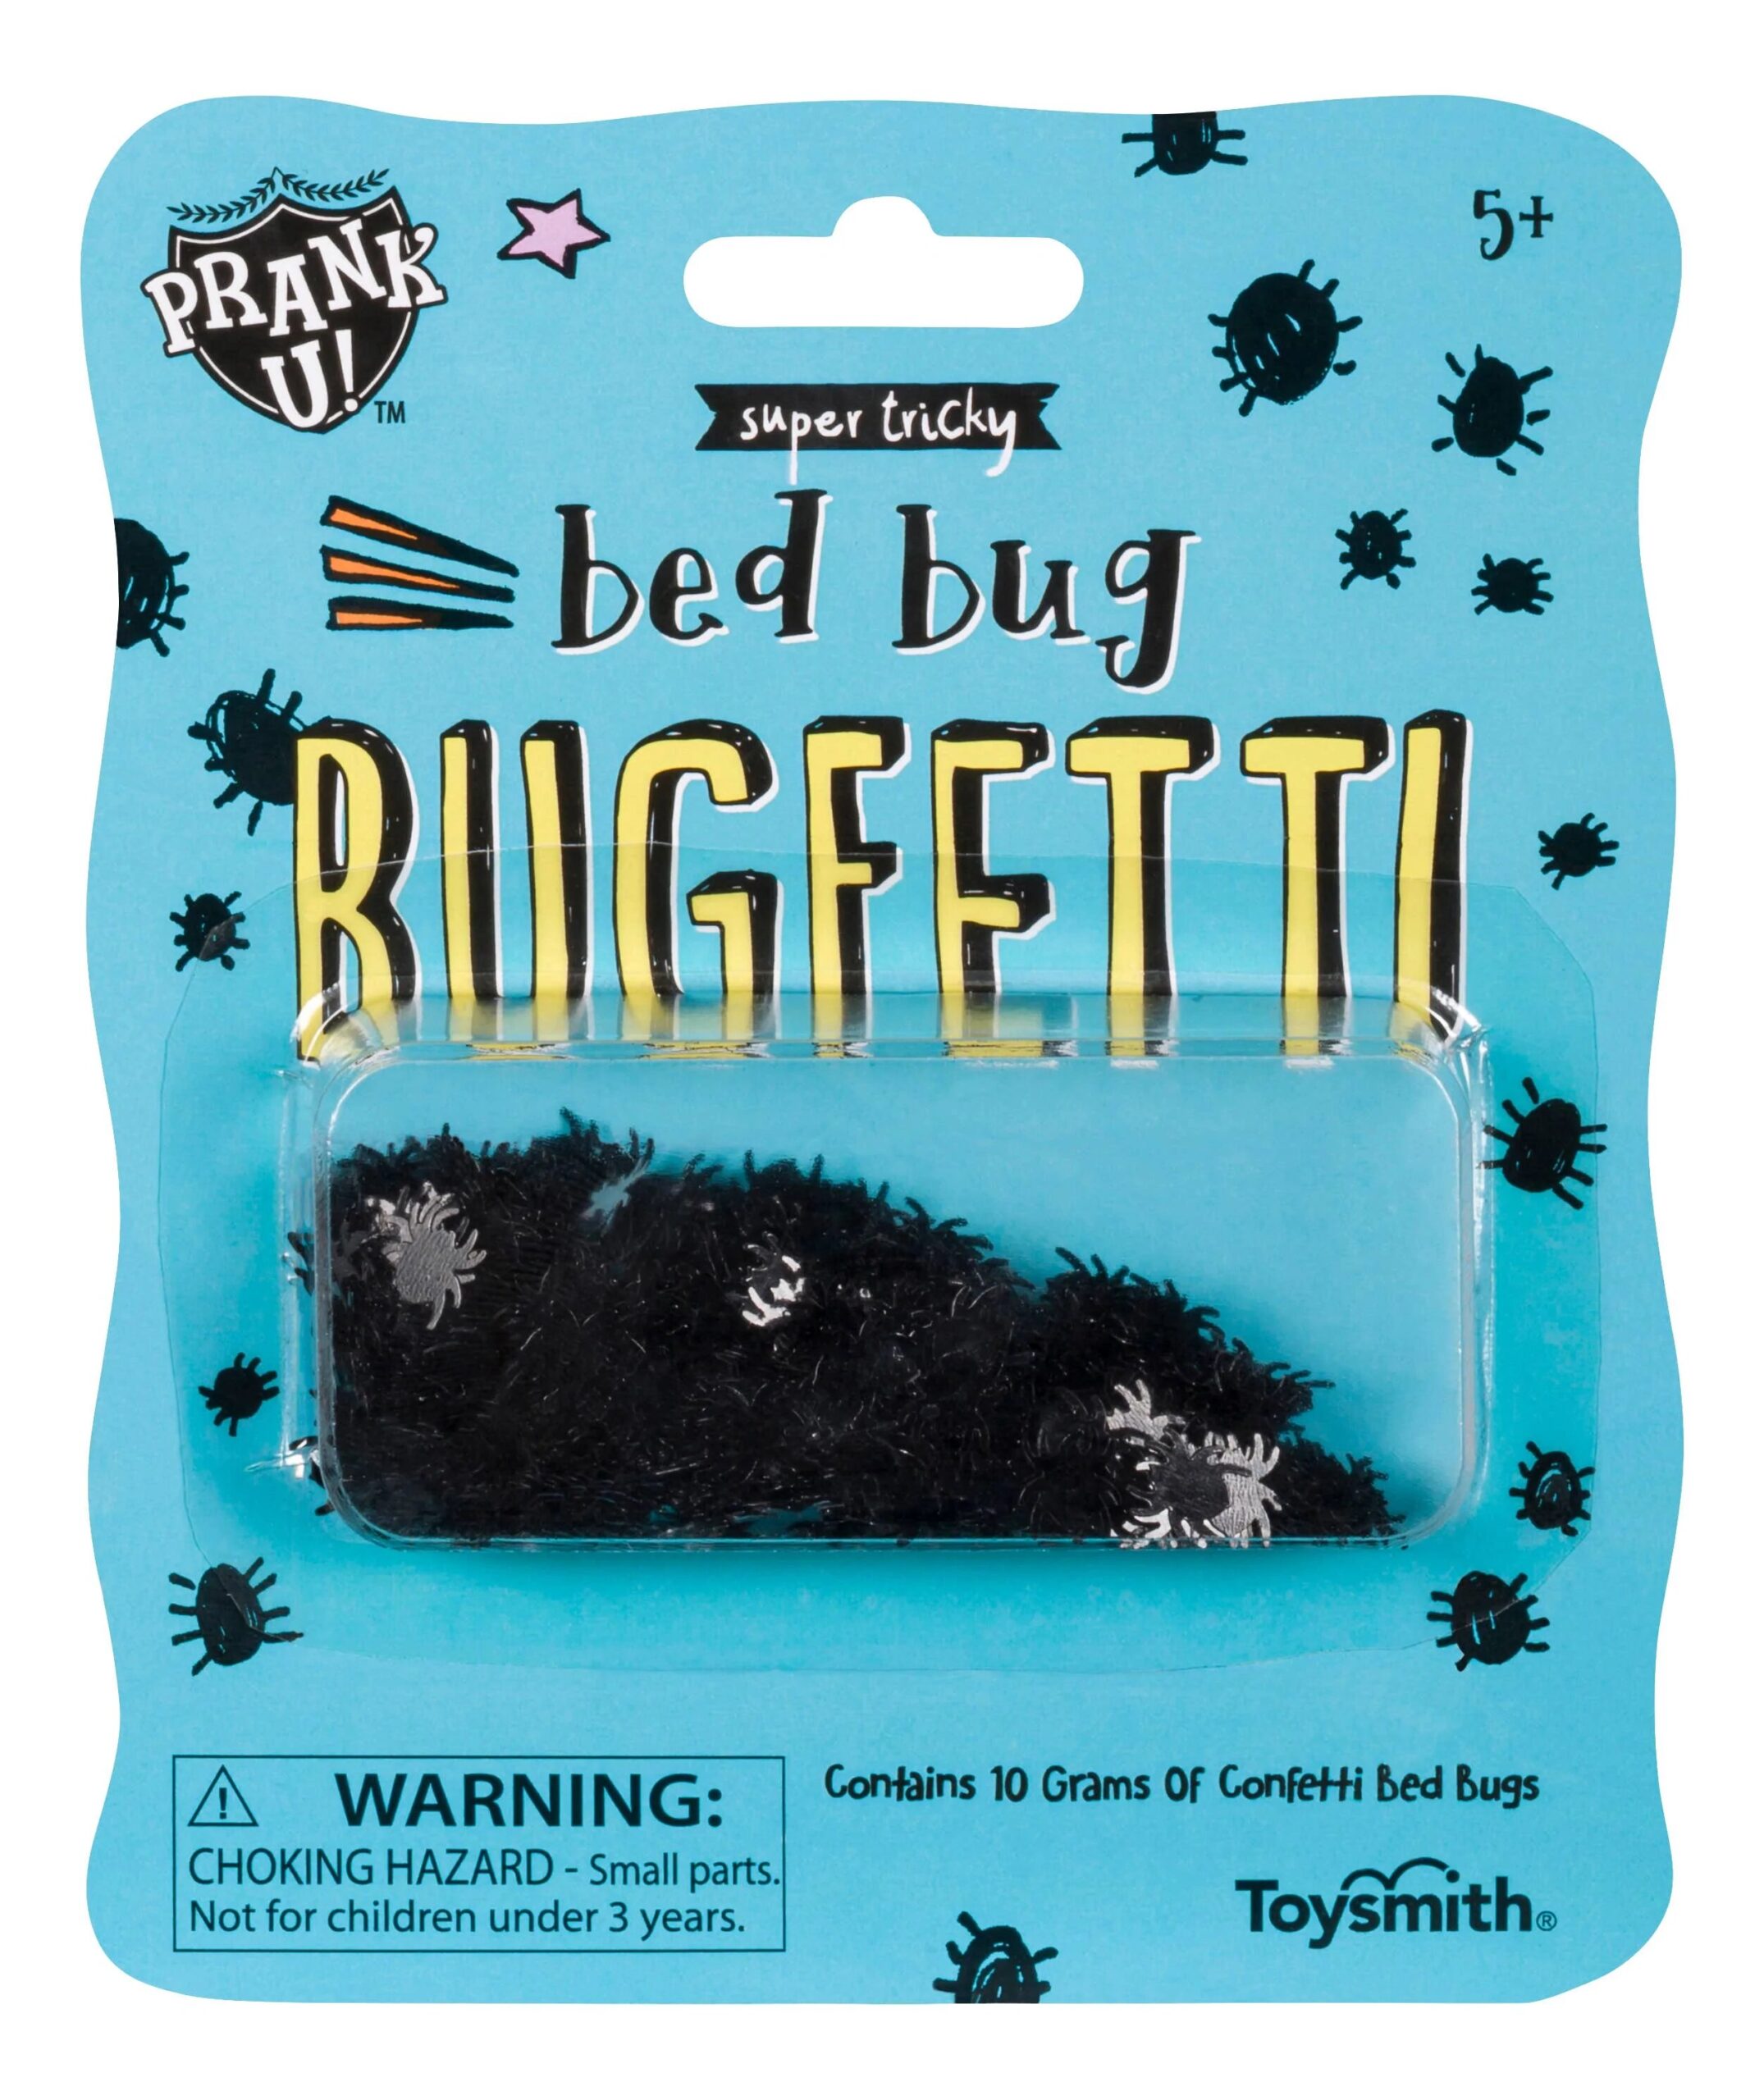 Bed Bug Bugfetti